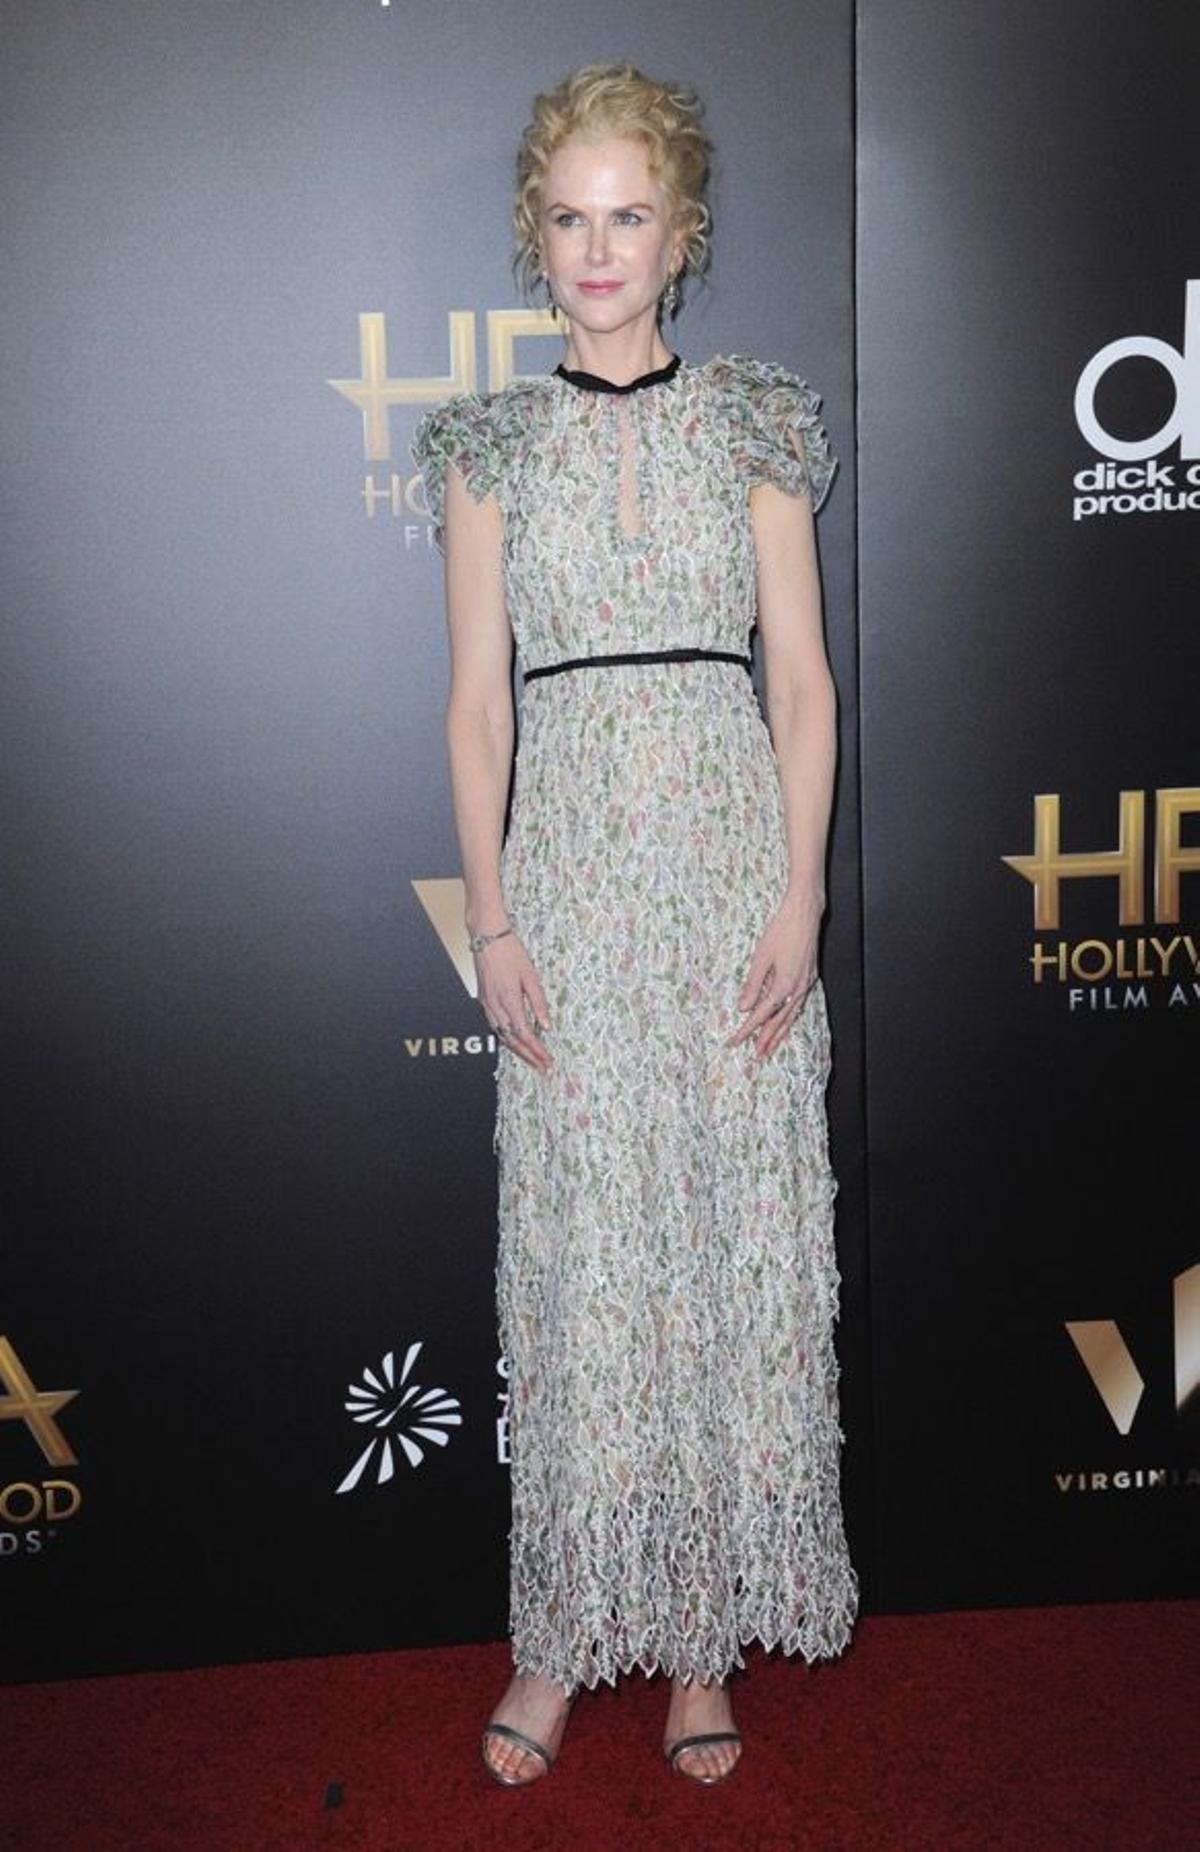 Hollywood Film Awards, Nicole Kidman